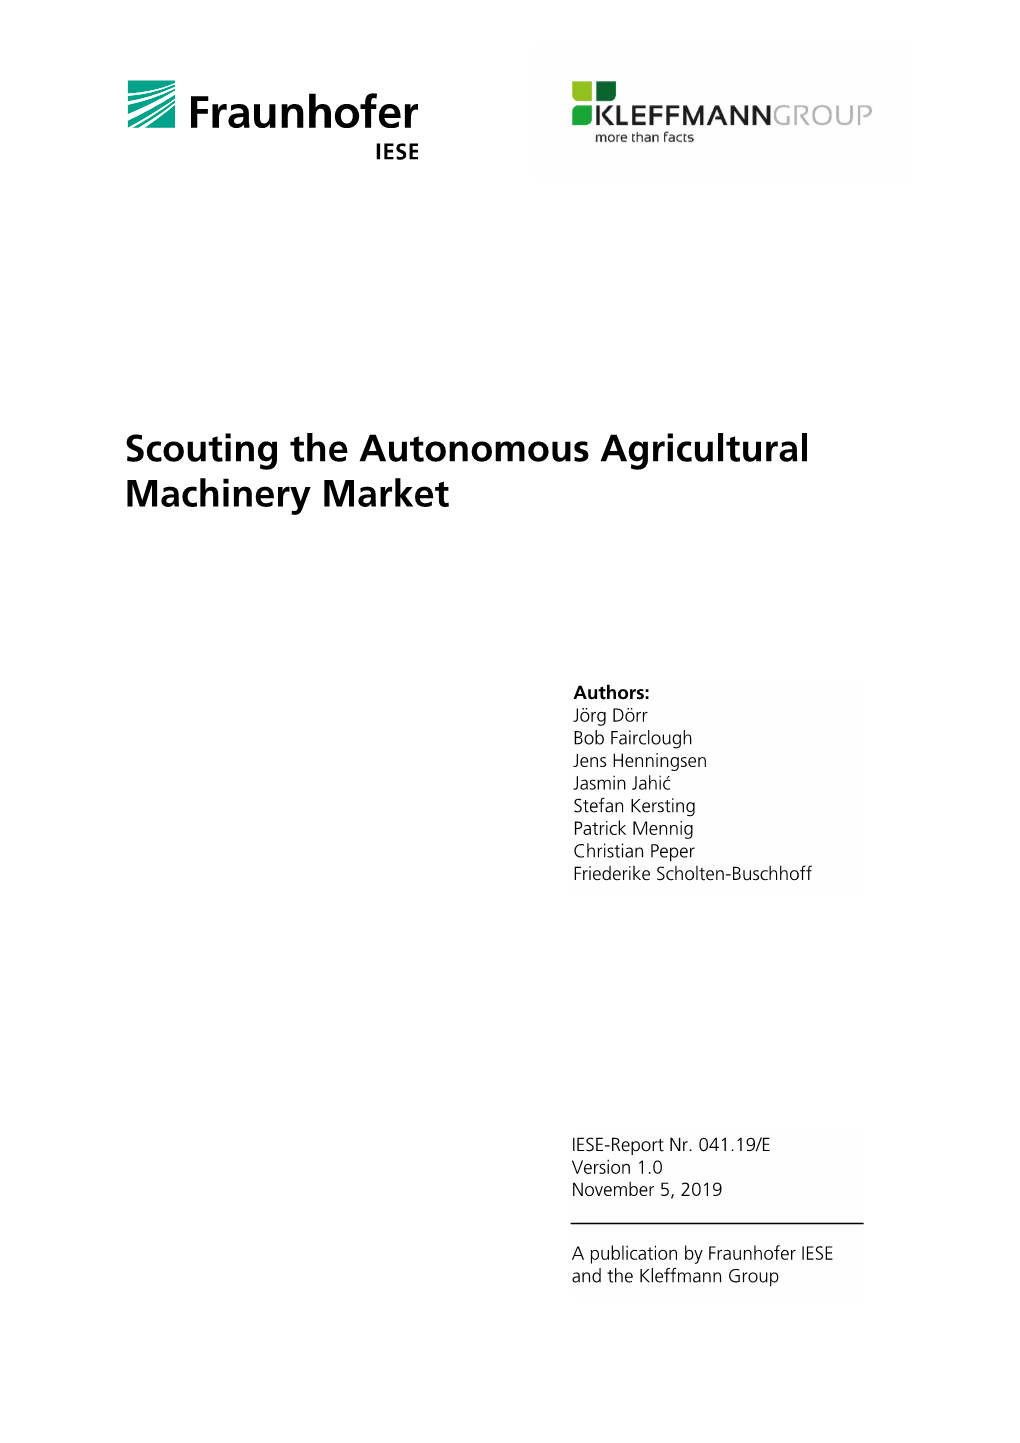 Scouting the Autonomous Agricultural Machinery Market